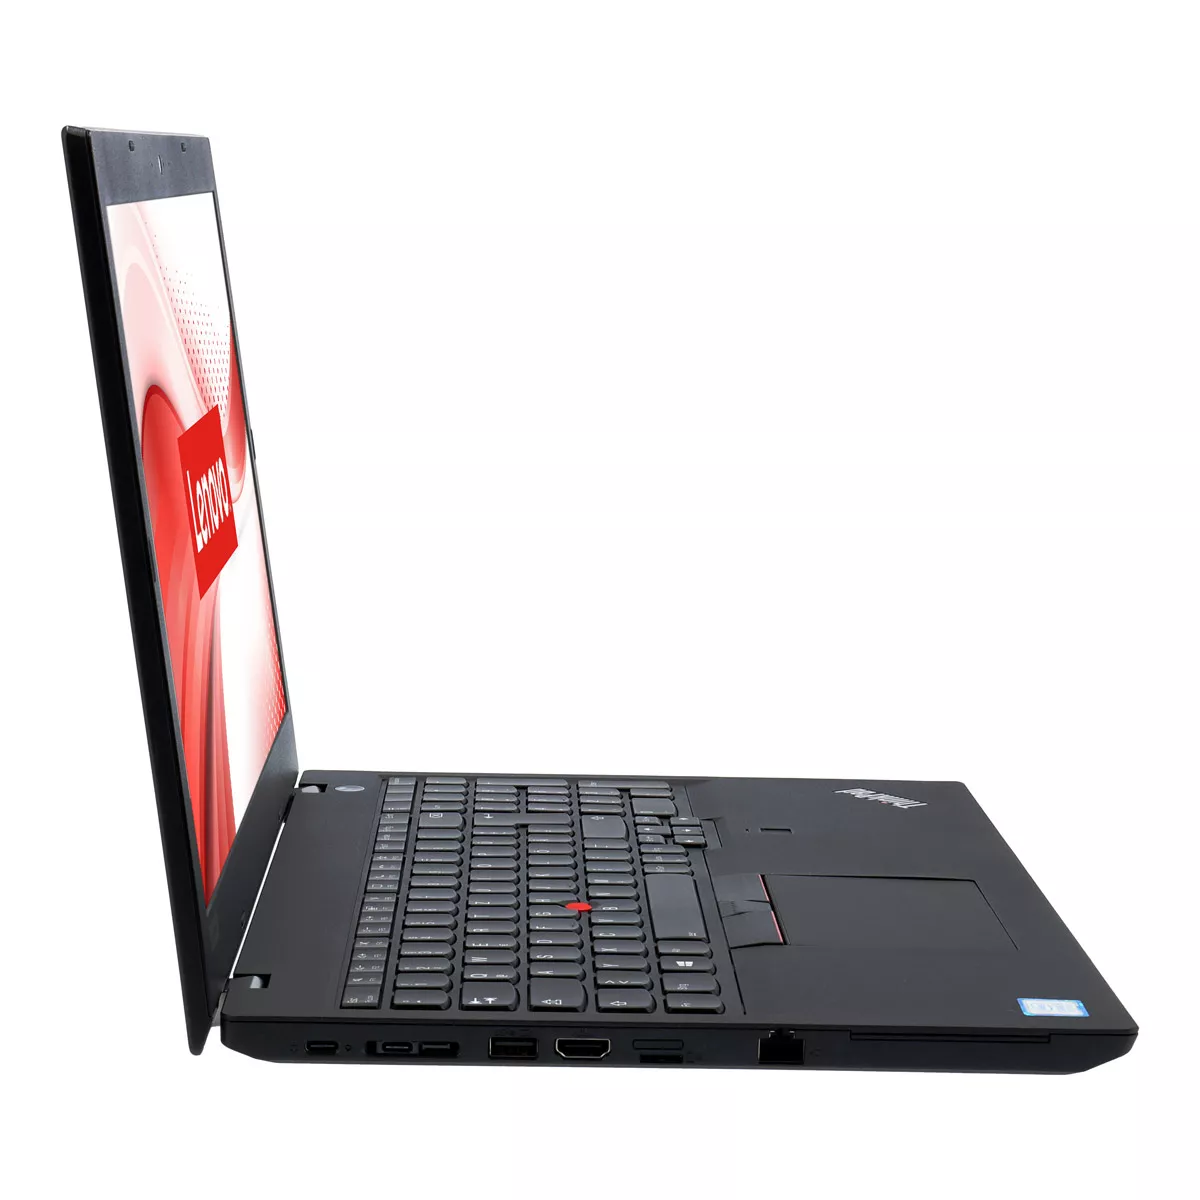 Lenovo ThinkPad L580 Core i5 8350U Full-HD 240 GB M.2 nVME SSD Webcam B